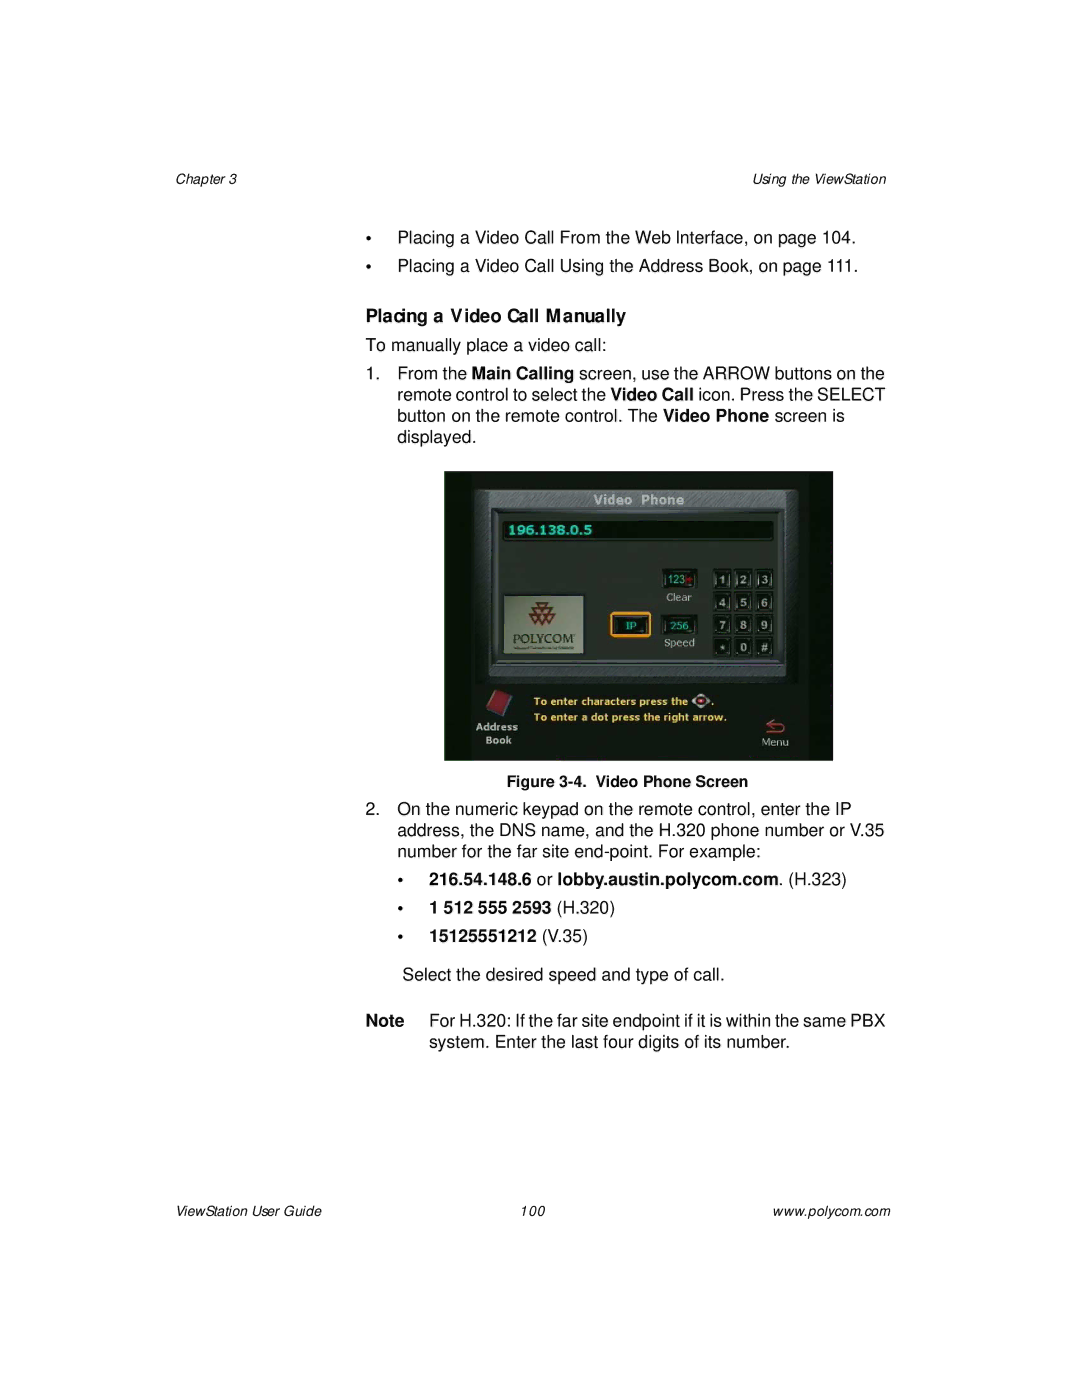 Polycom ViewStation manual Placing a Video Call Manually, Video Phone Screen 